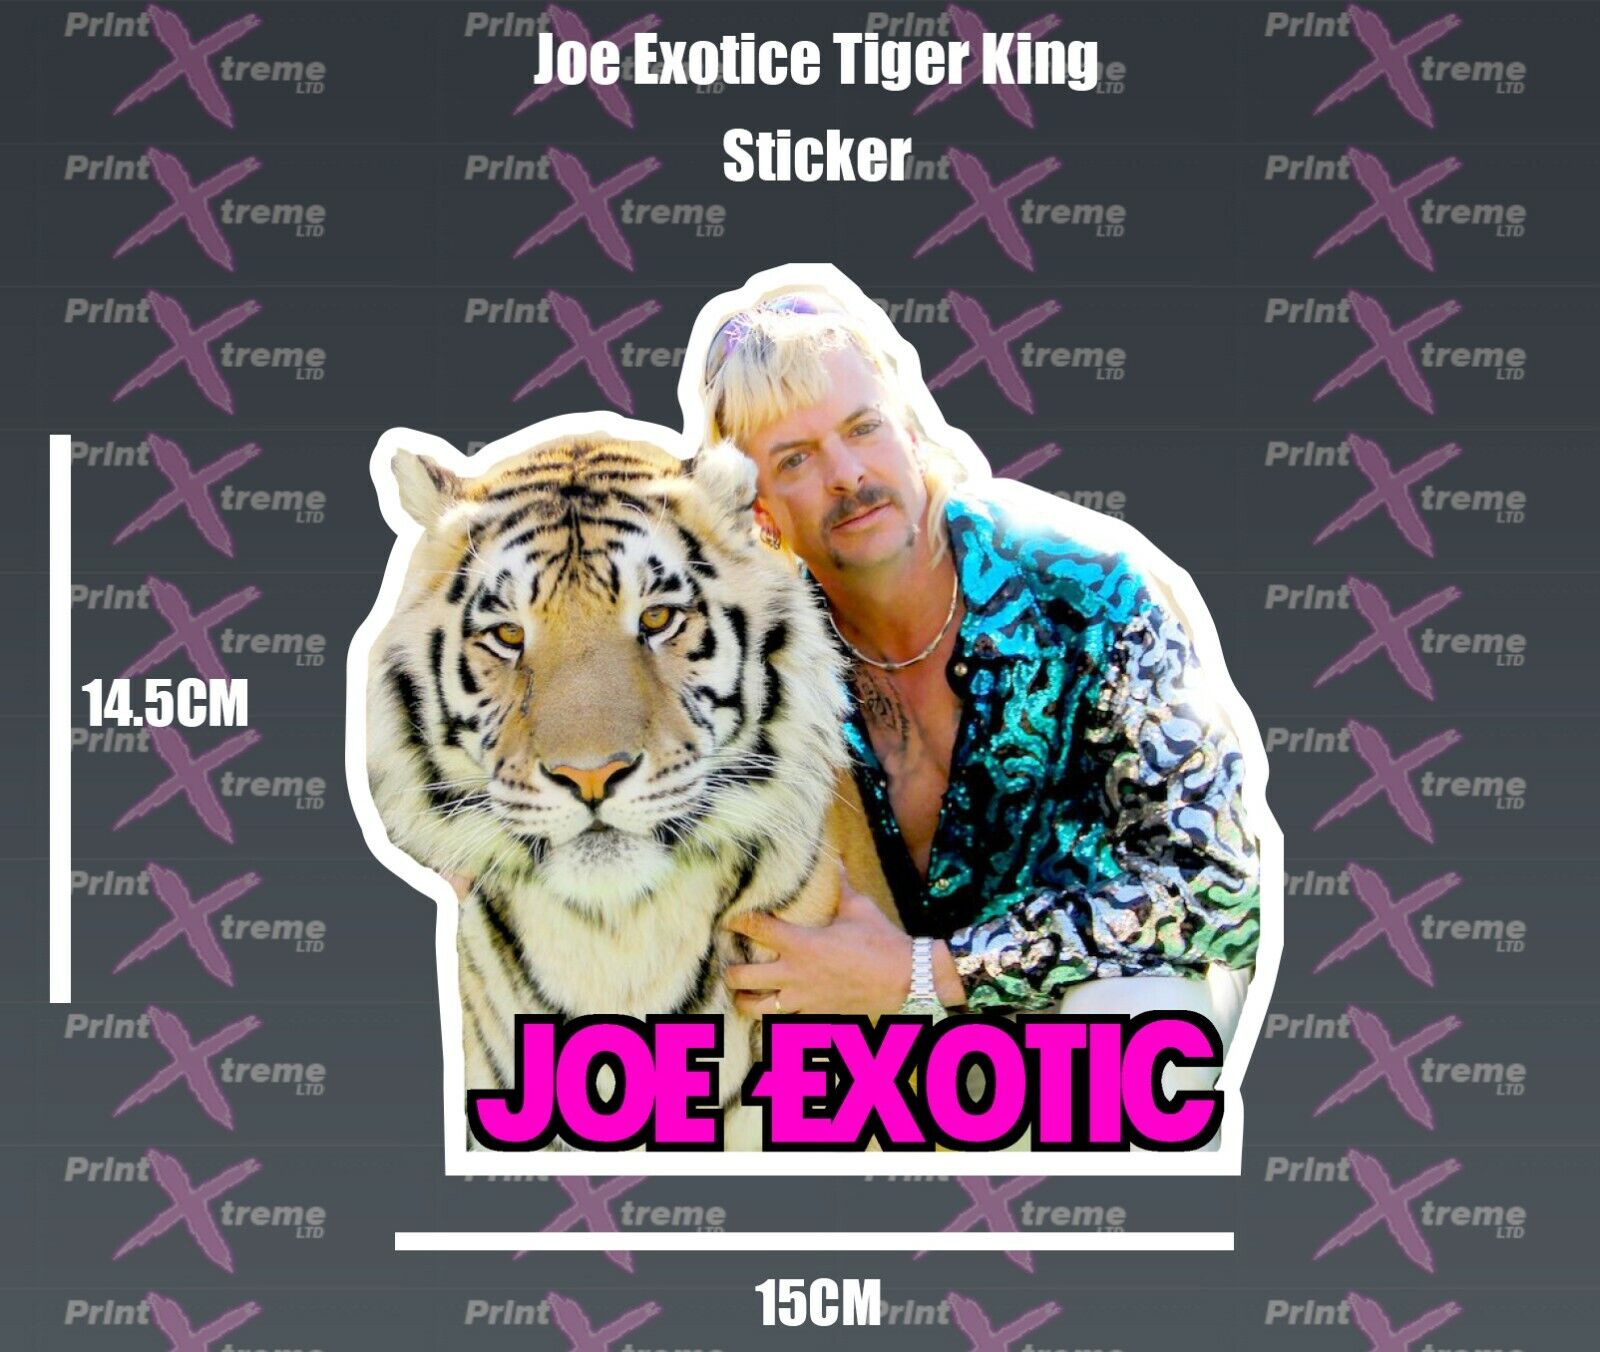 JOE EXOTIC Sticker, Tiger King car van Laptop toolbox funny meme carole  baskin | eBay